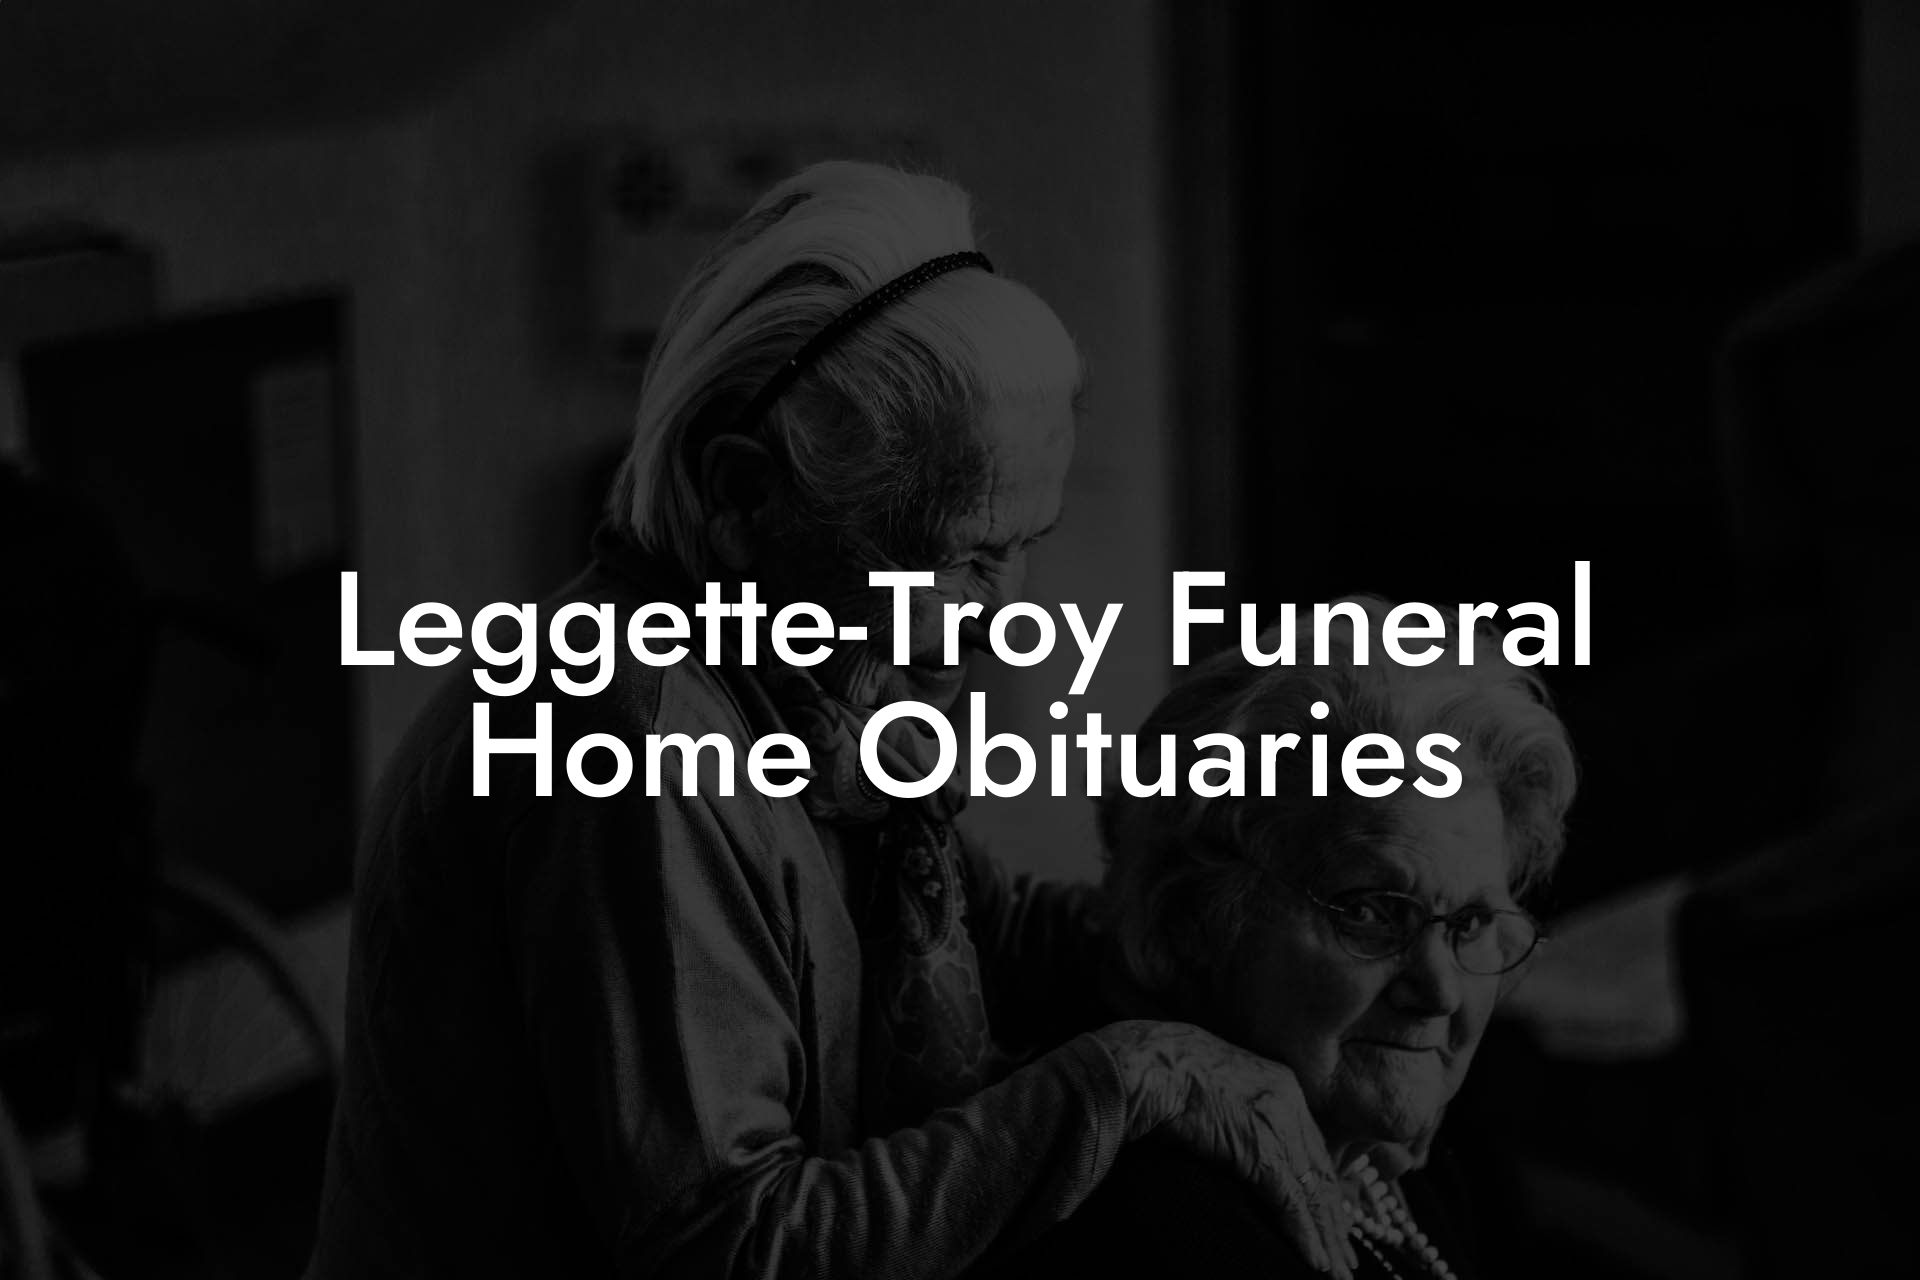 Leggette-Troy Funeral Home Obituaries